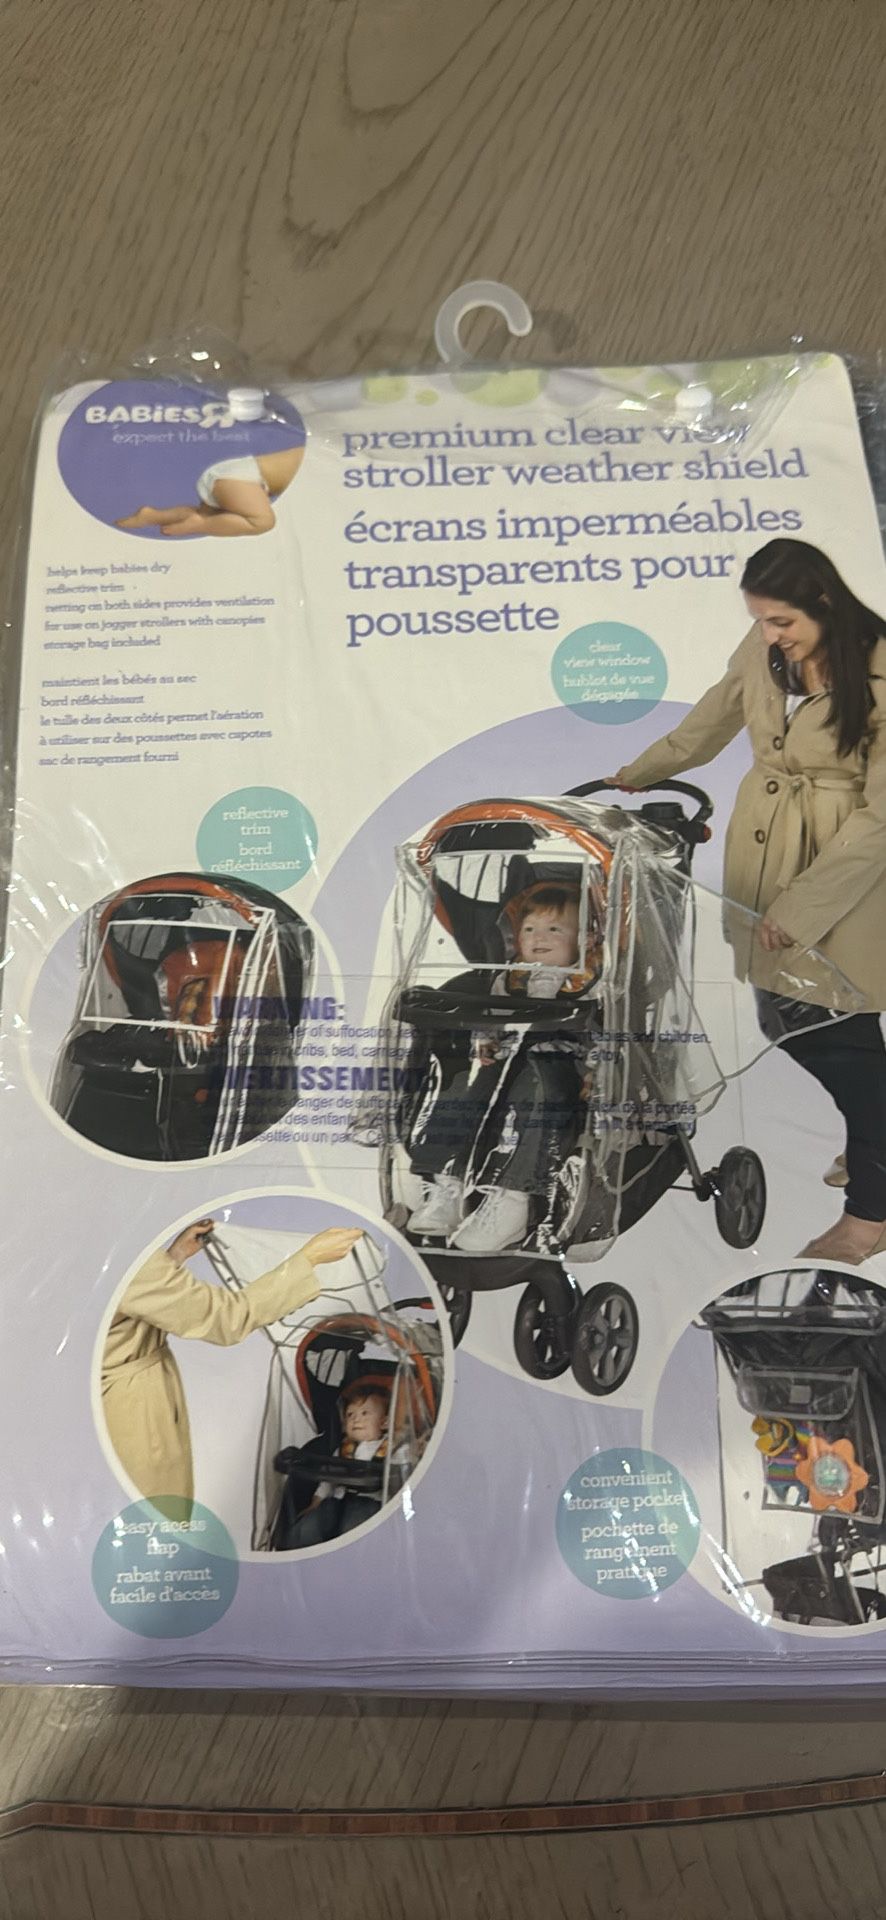 Babies R Us stroller weather shield